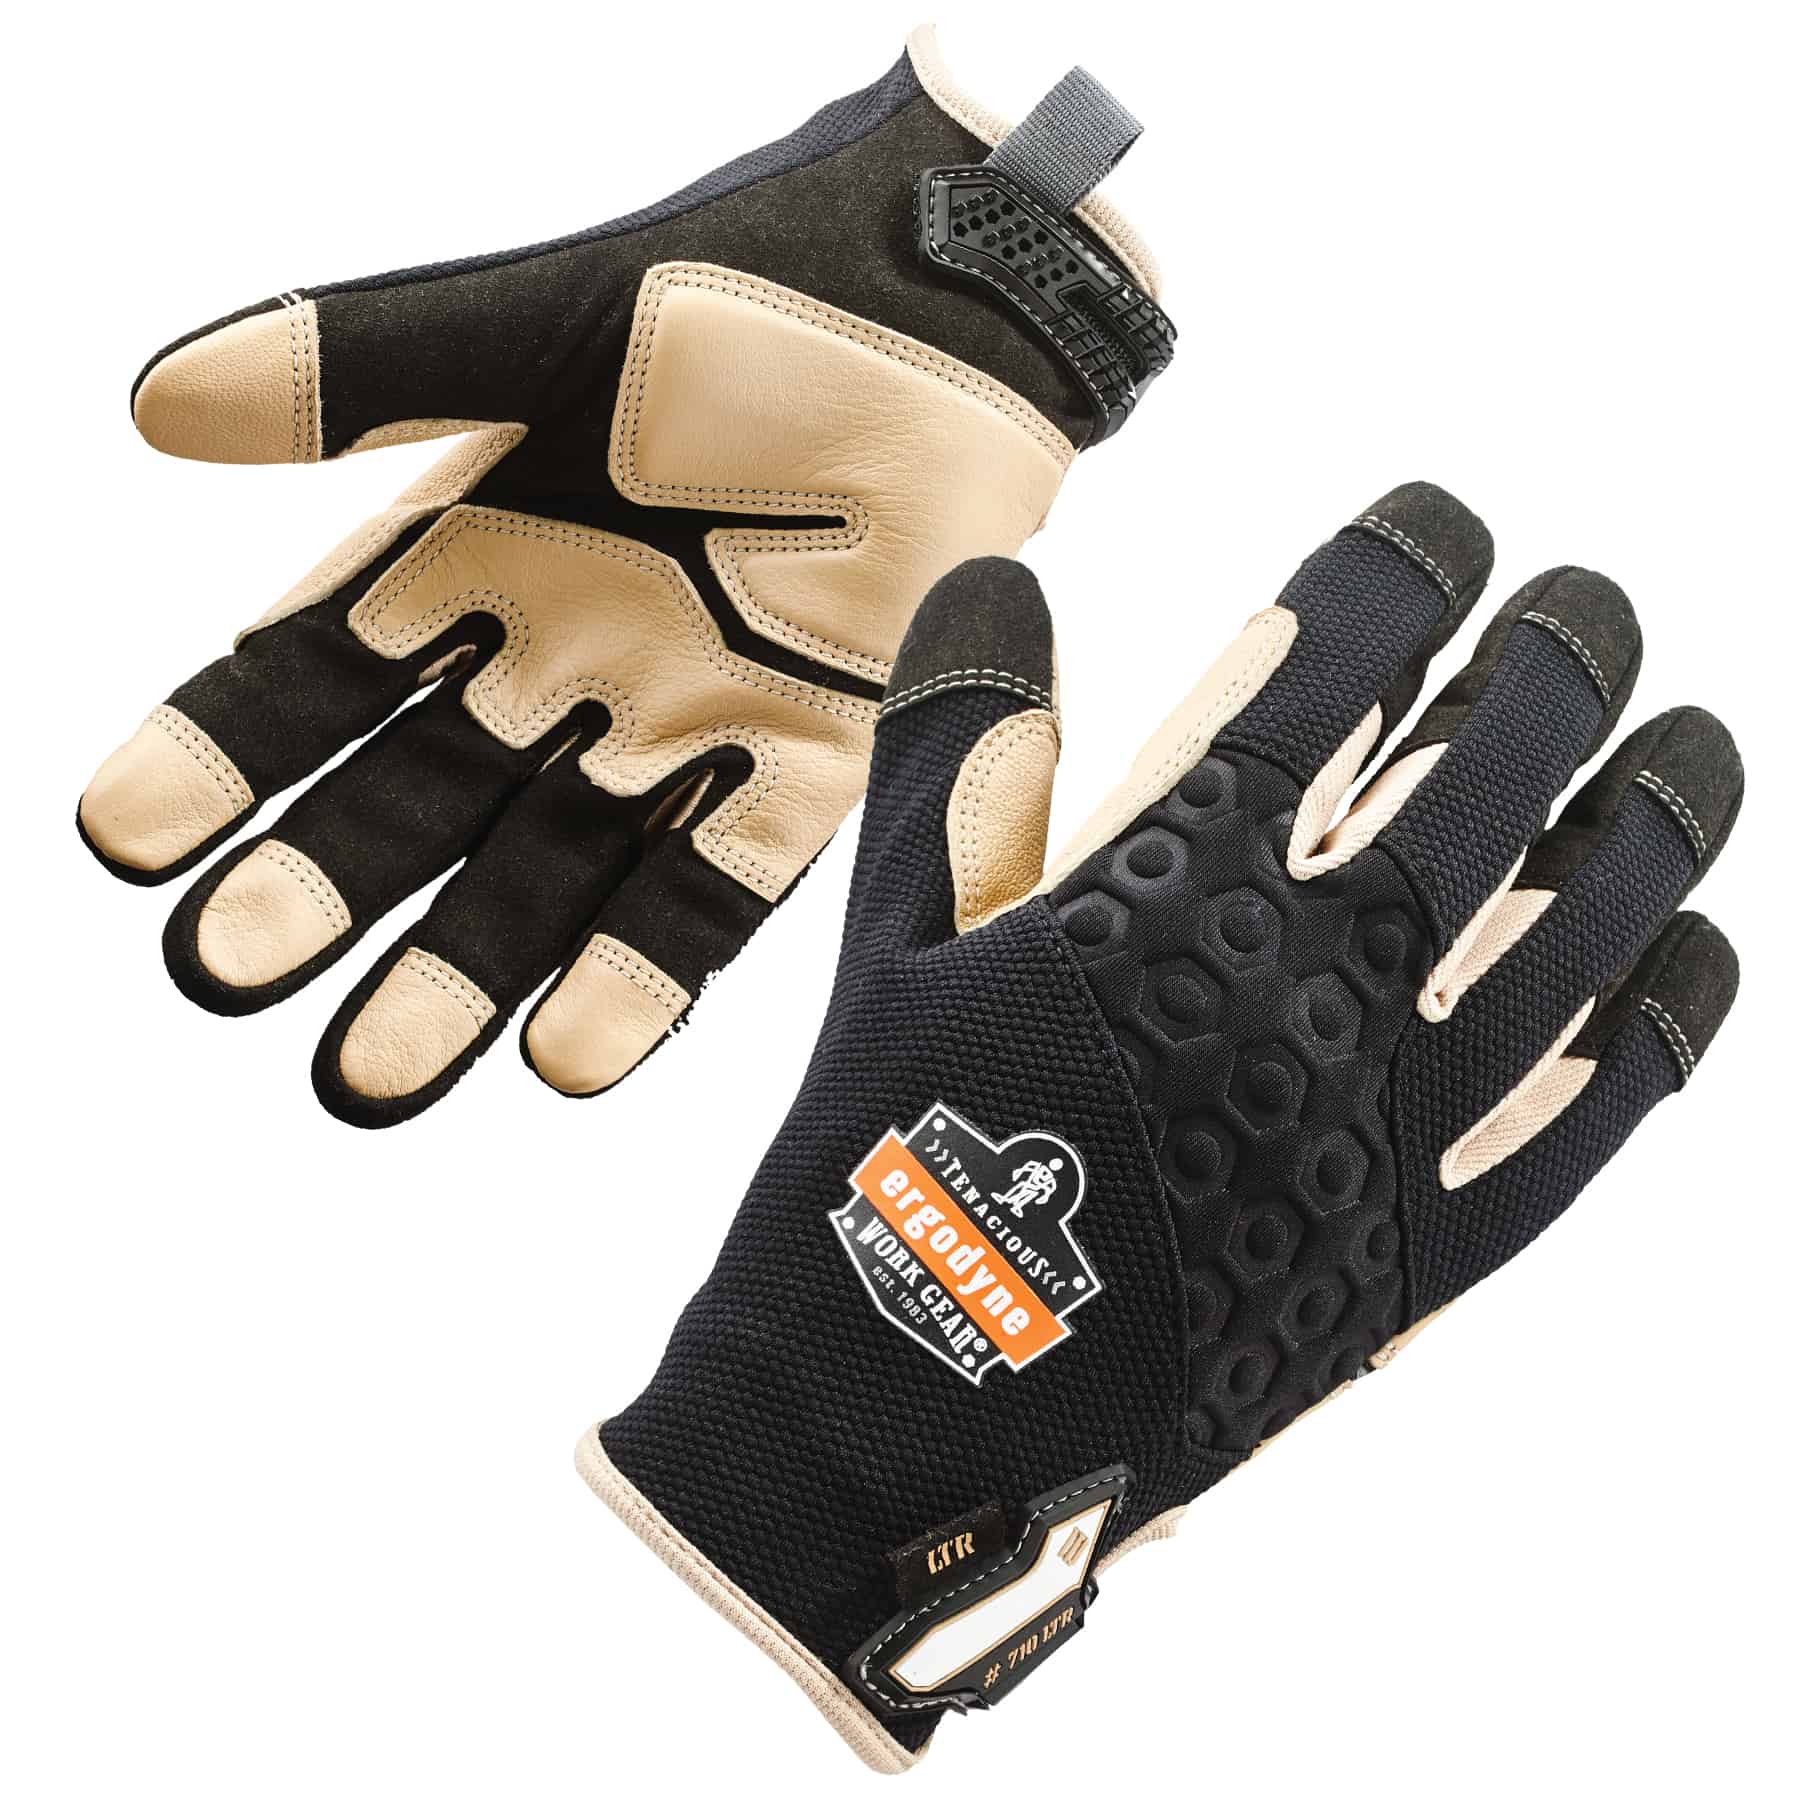 https://www.ergodyne.com/sites/default/files/product-images/17142-710ltr-heavy-duty-work-gloves-pair.jpg